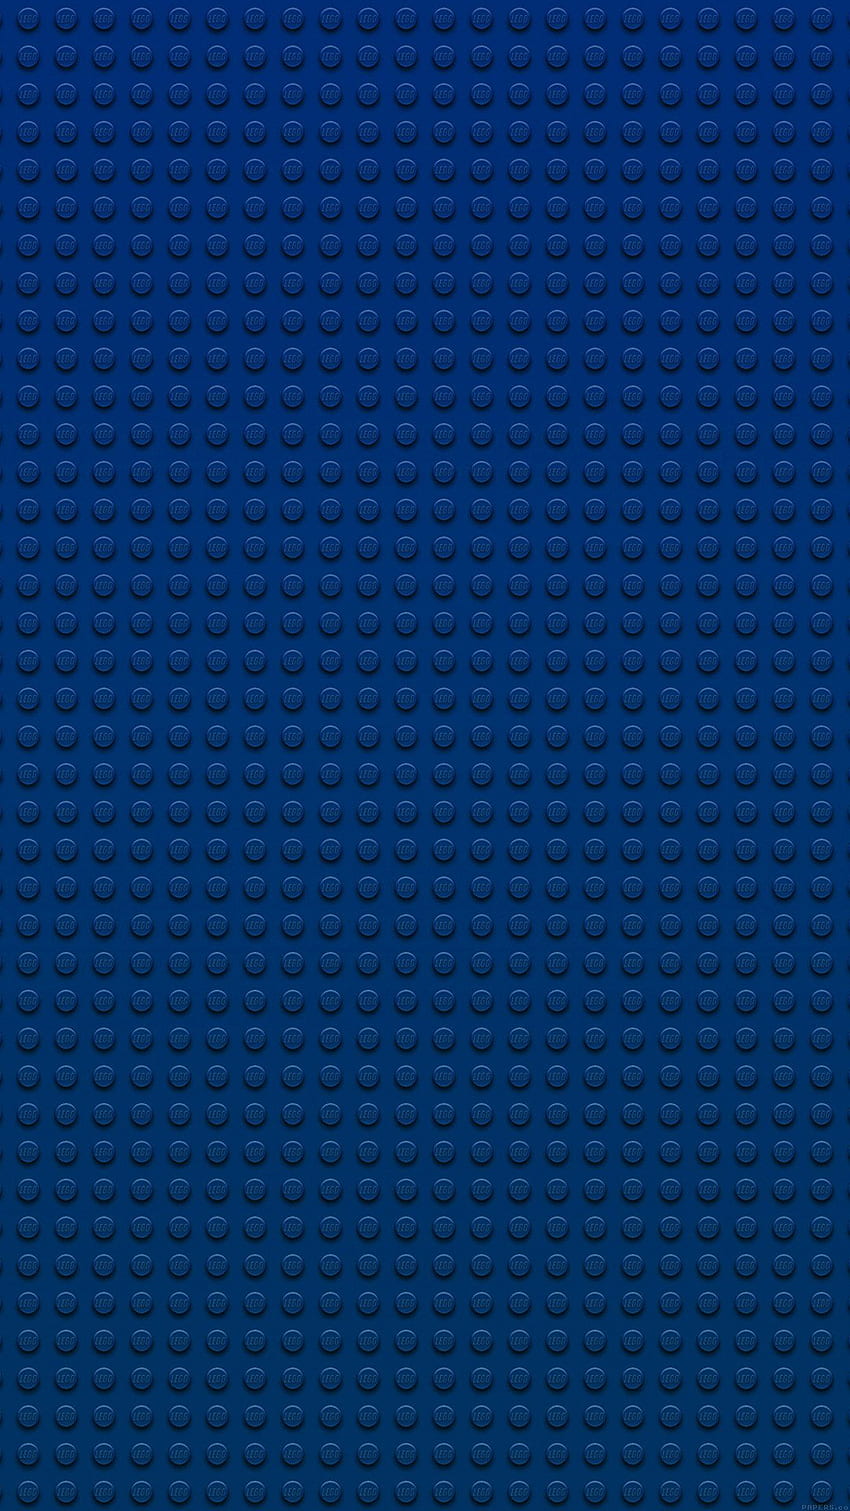 Saya Suka Makalah. mainan lego pola blok biru tua wallpaper ponsel HD